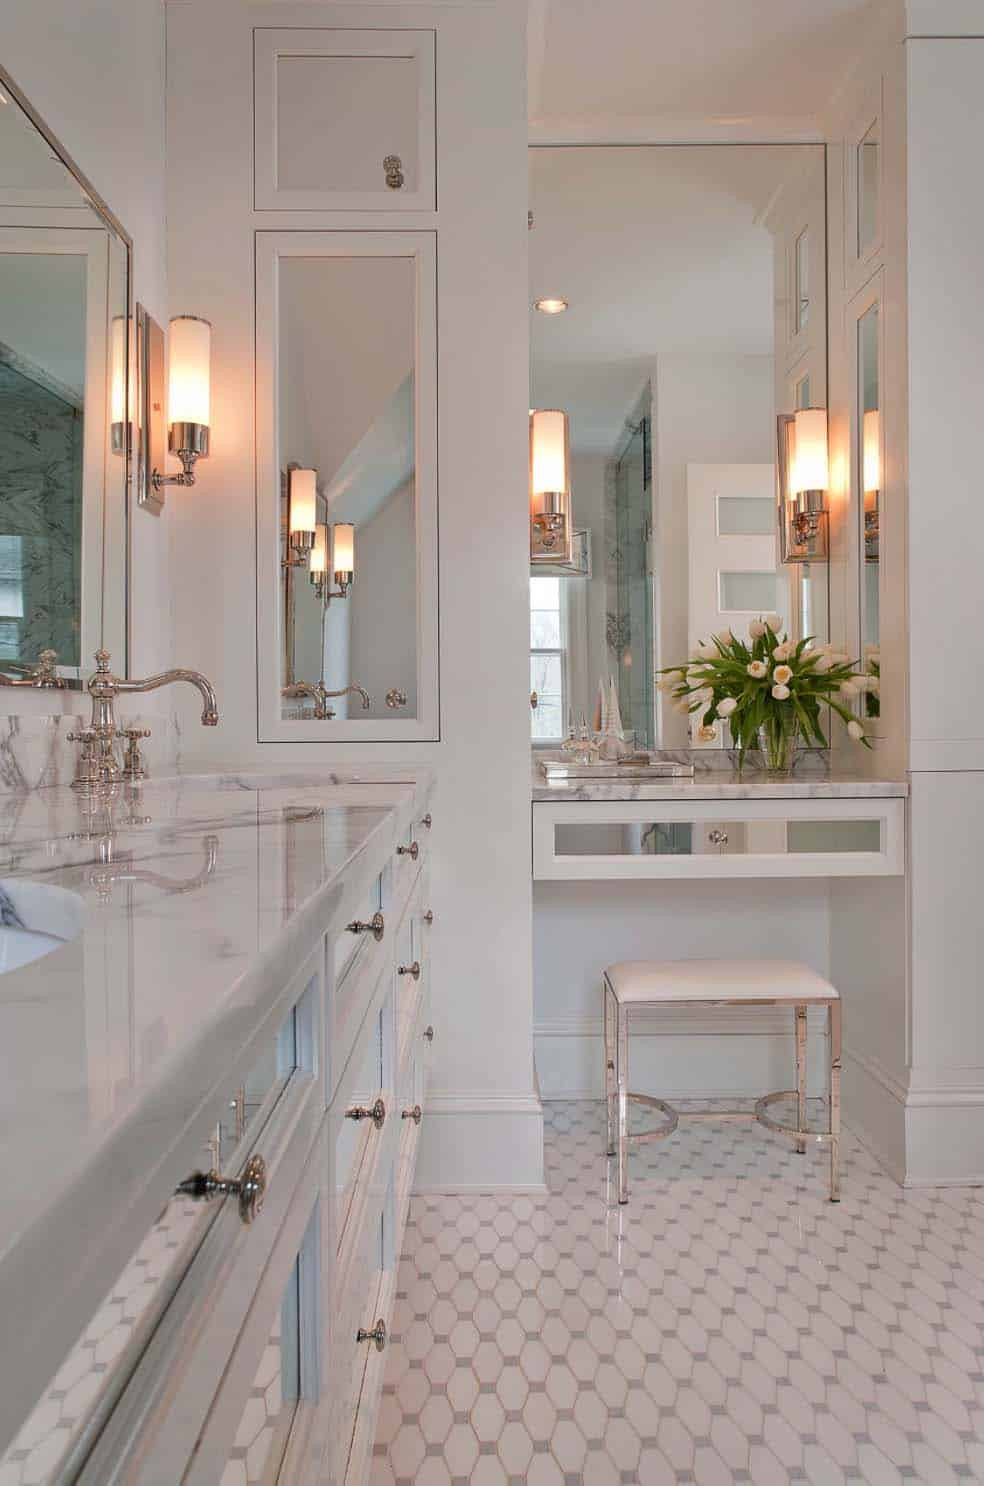 Luxury Bathroom Designs Gallery
 53 Most fabulous traditional style bathroom designs ever